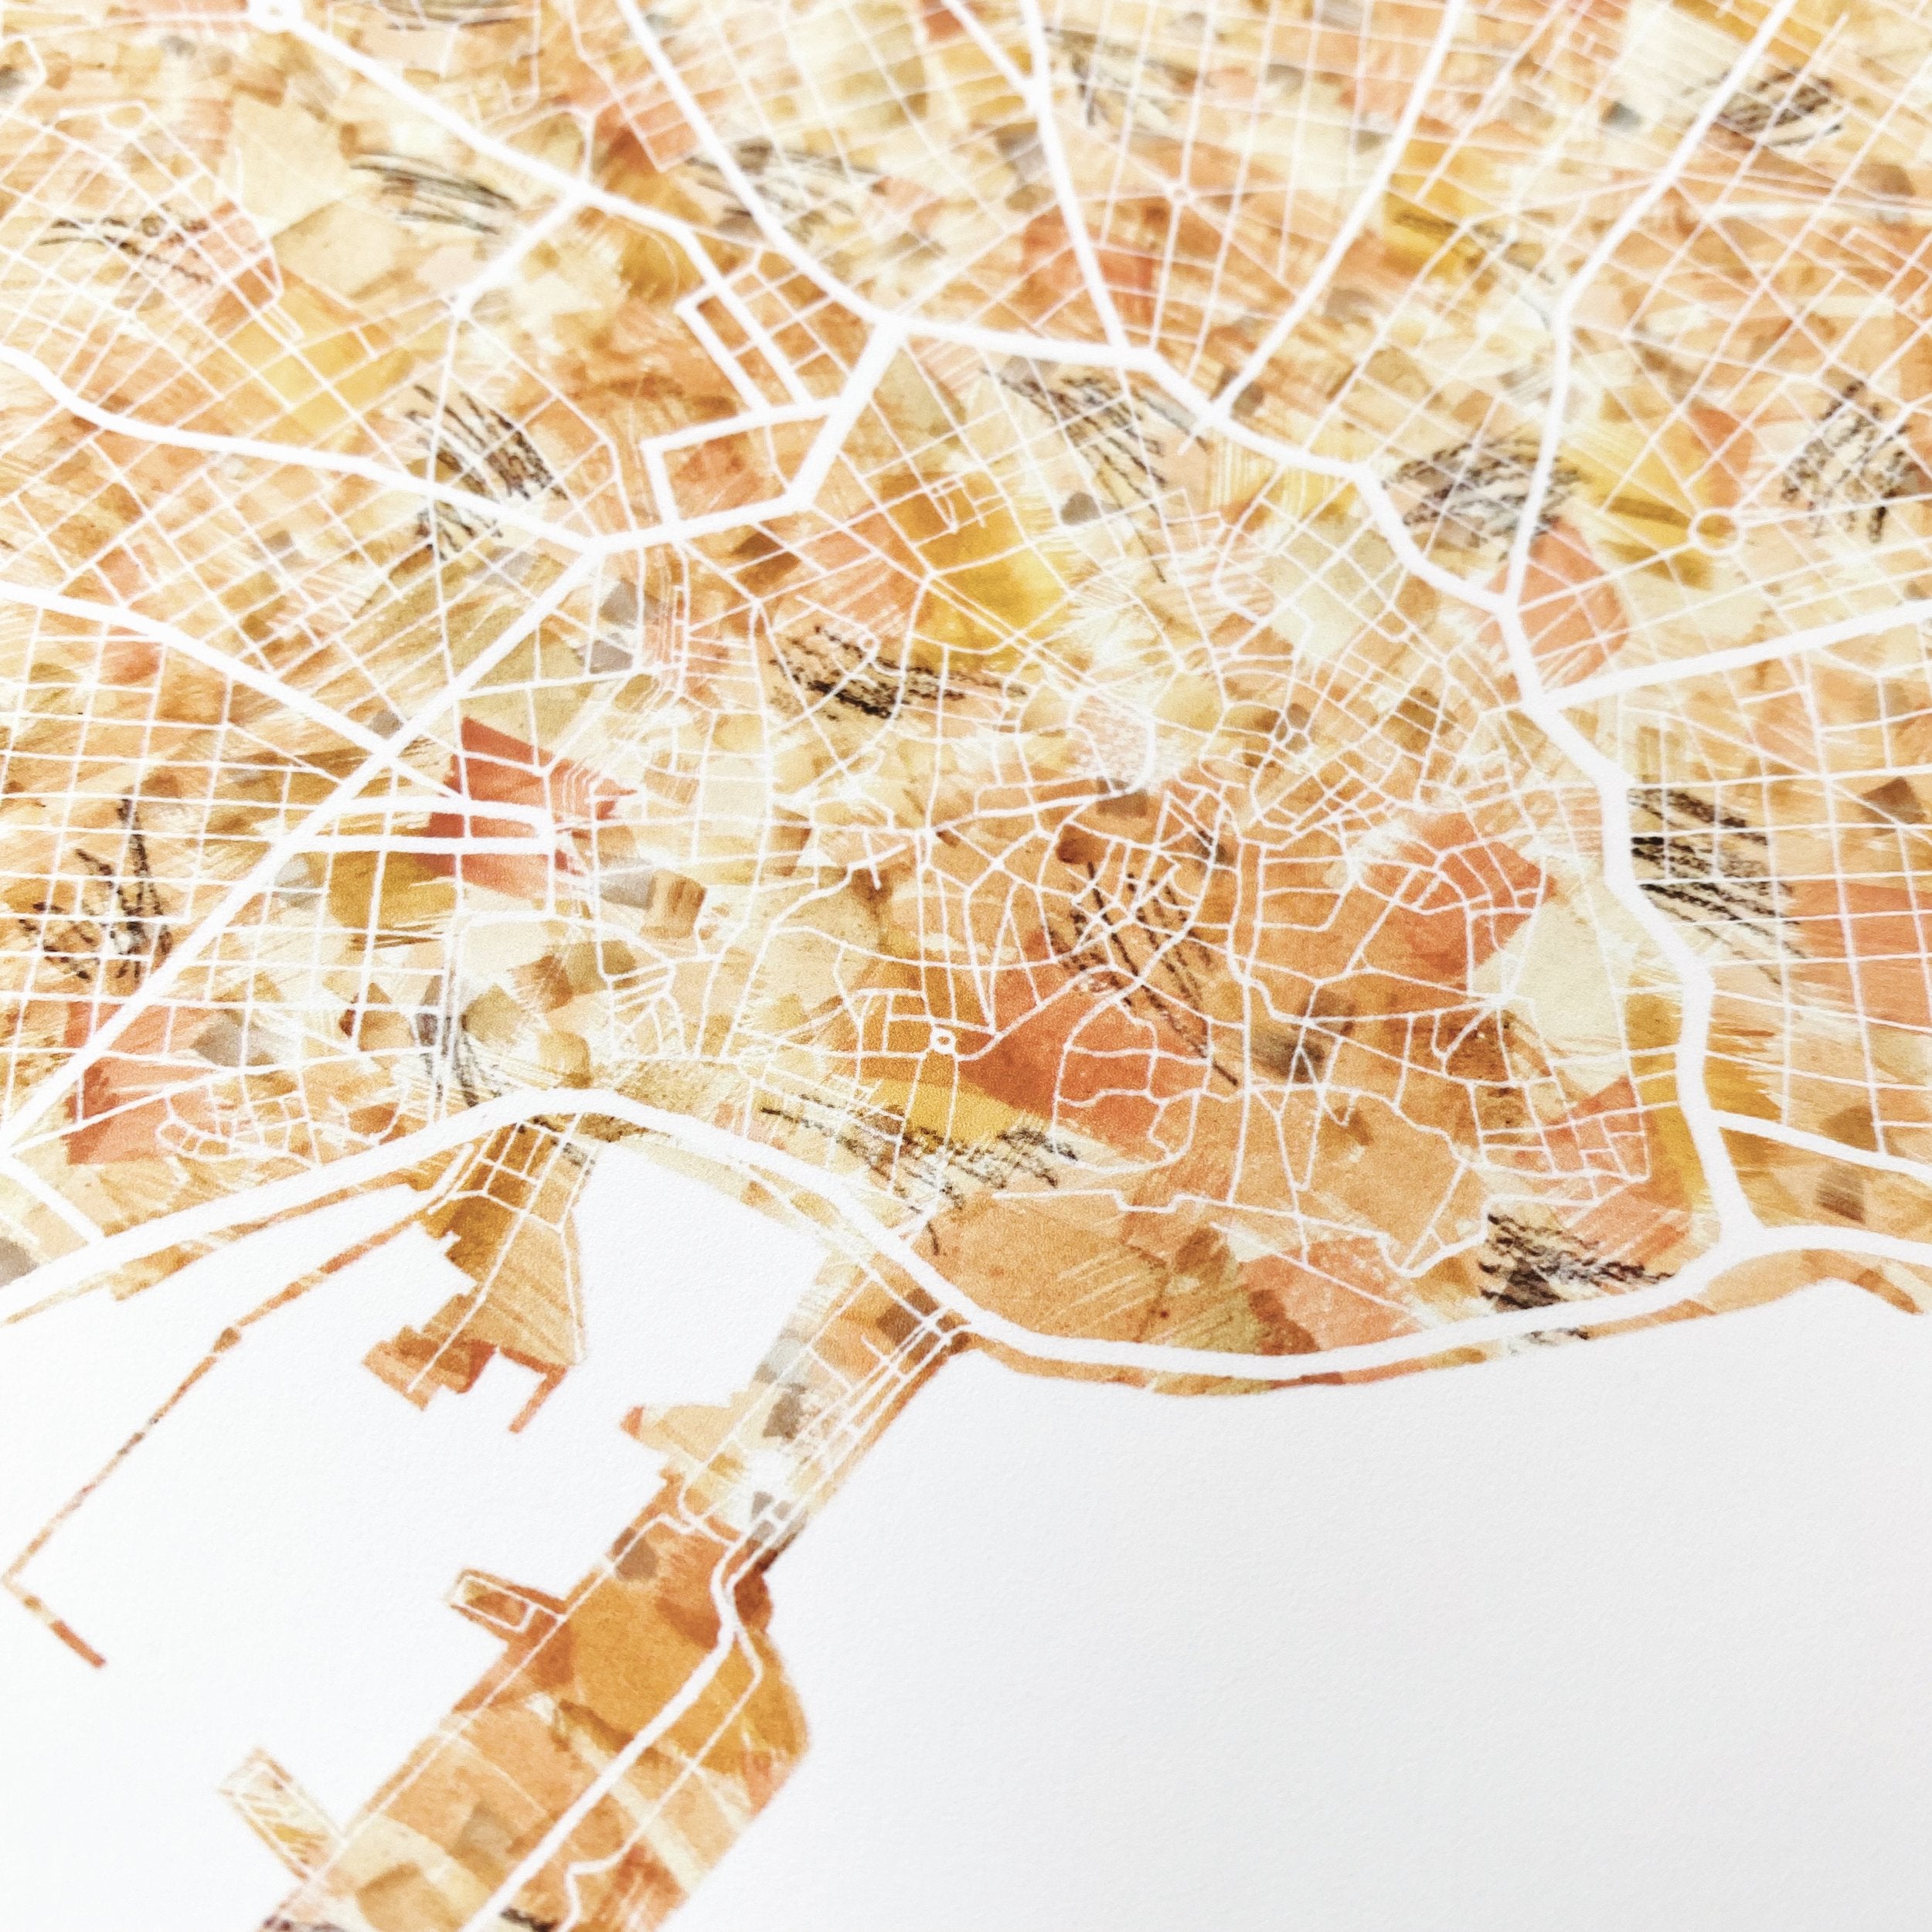 PALMA de MALLORCA Urban Fabrics City Map: PRINT